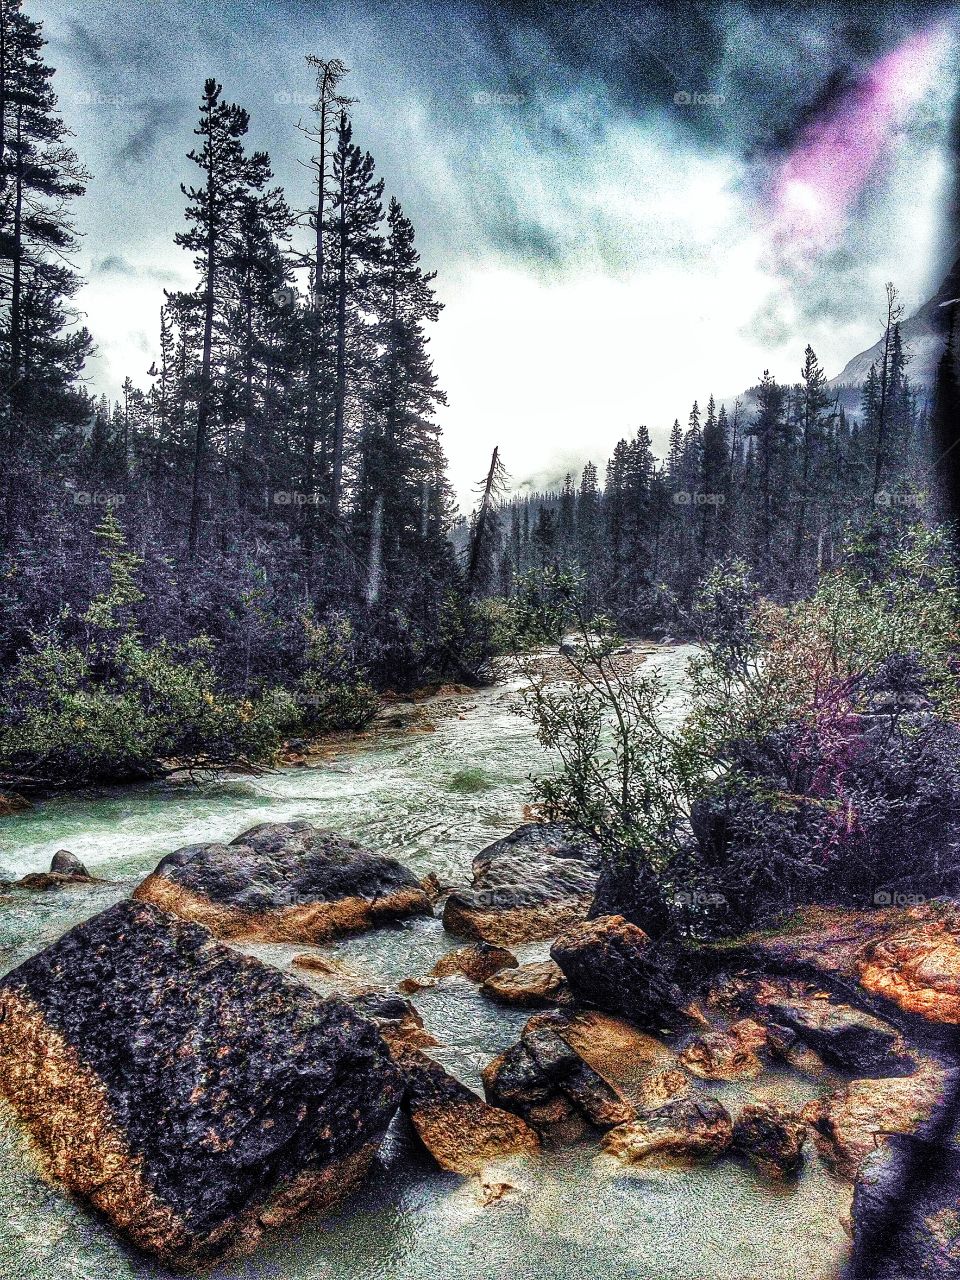 Takakkaw Falls, BC, Canada. 